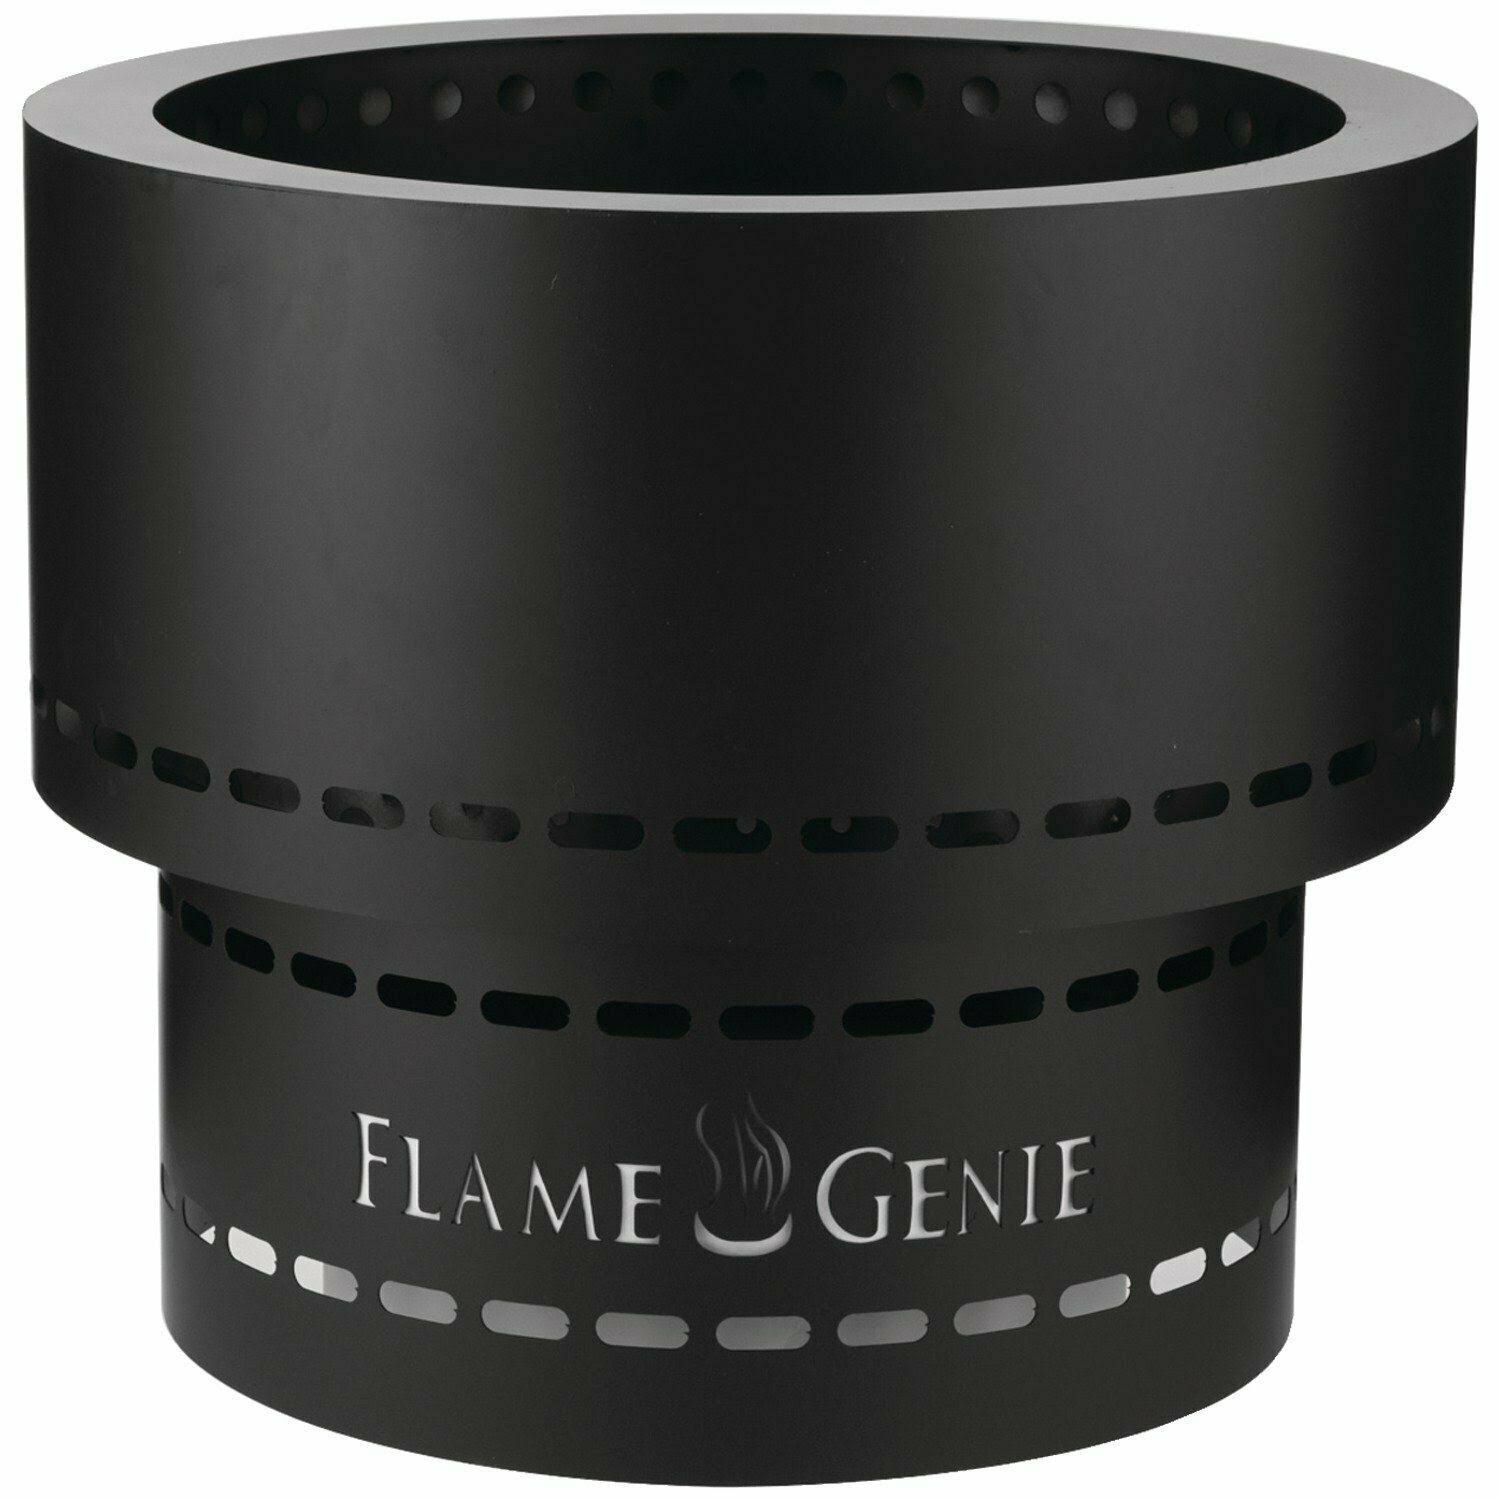 Hyc Flame Genie Inferno Pellet Fire Pit - Black, 19" x 16.25"